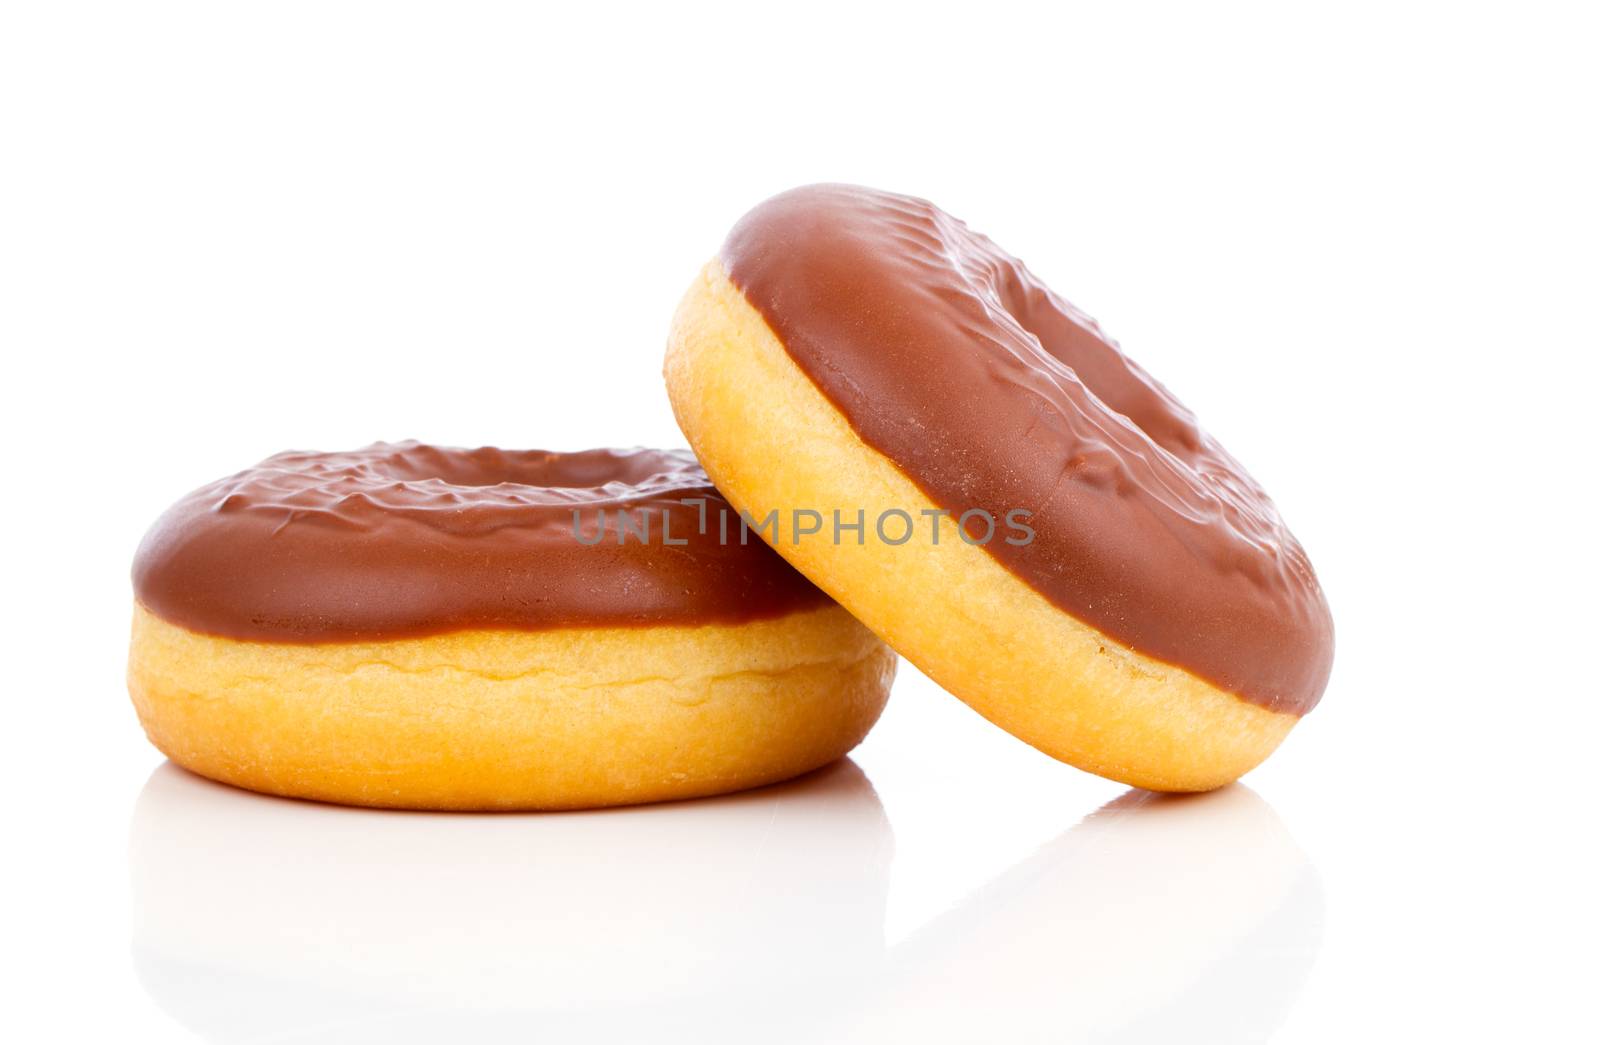 donut isolated on white background by motorolka